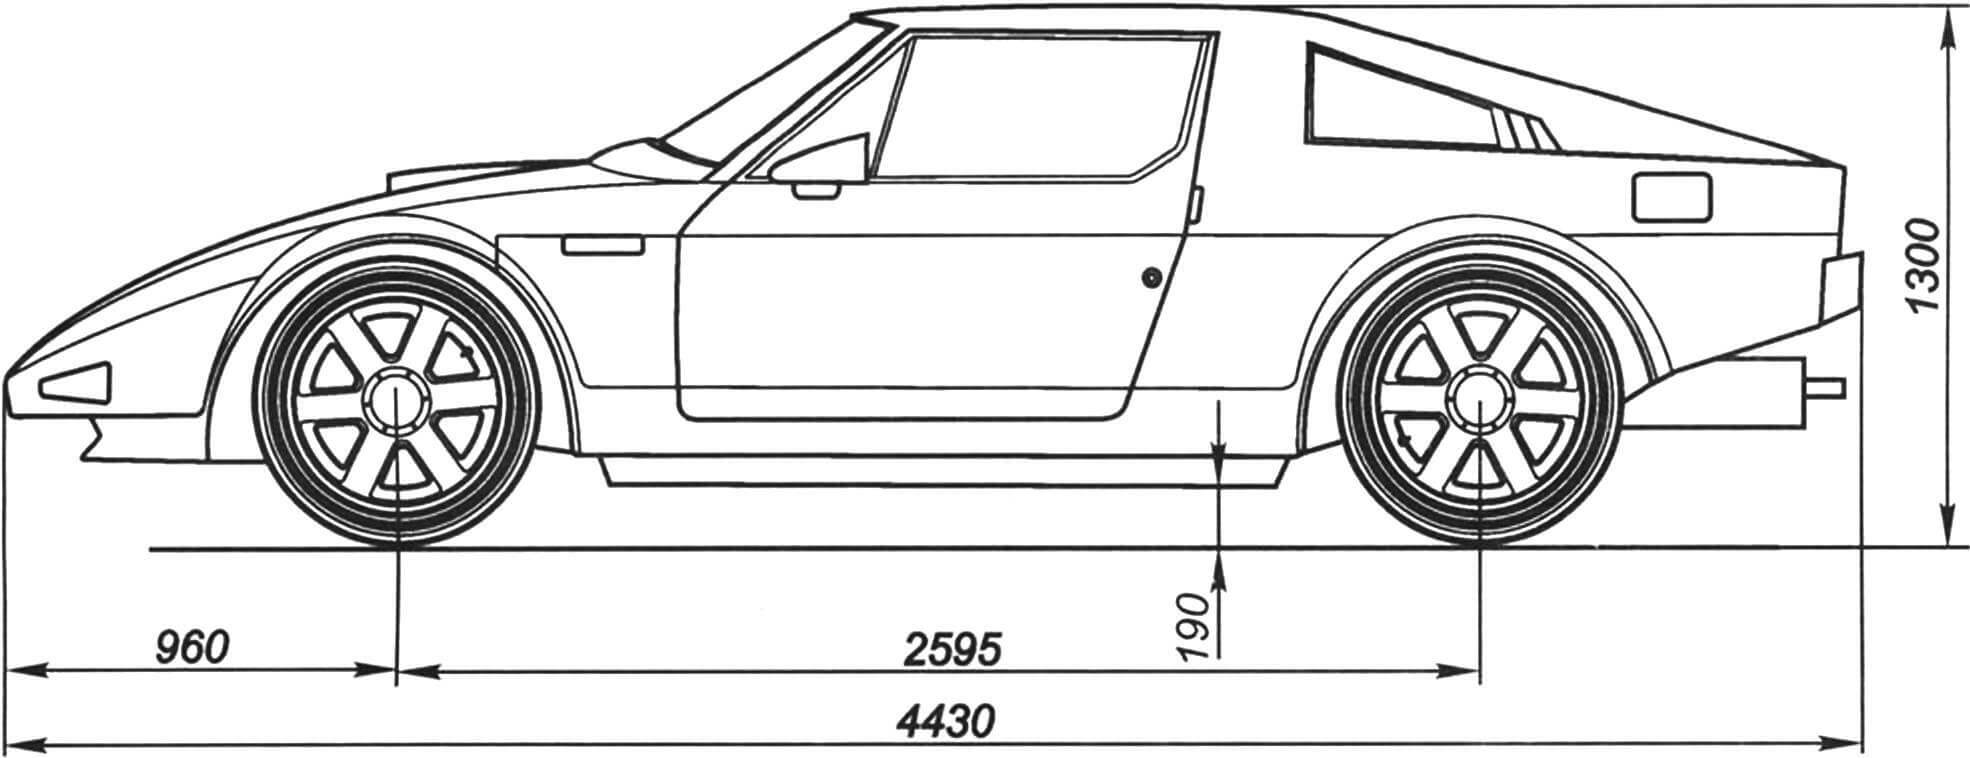 Geometric diagram of the original version of the Yuna car